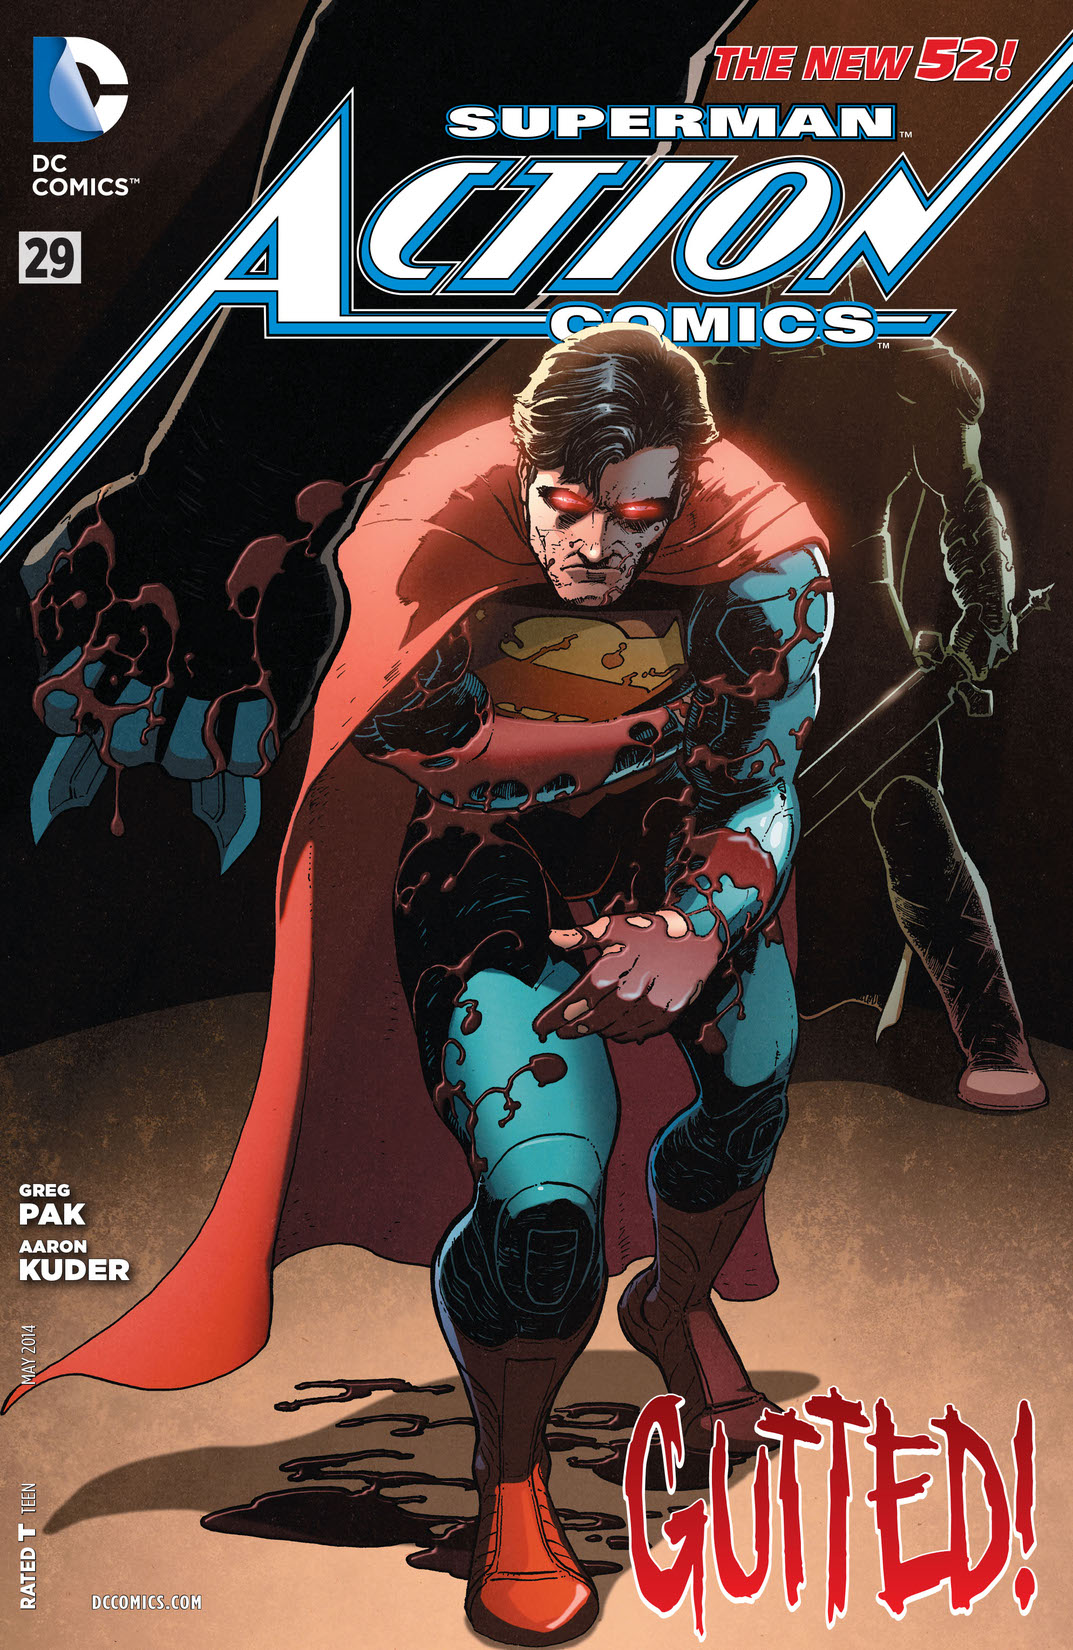 Action Comics (2011-) #29 preview images